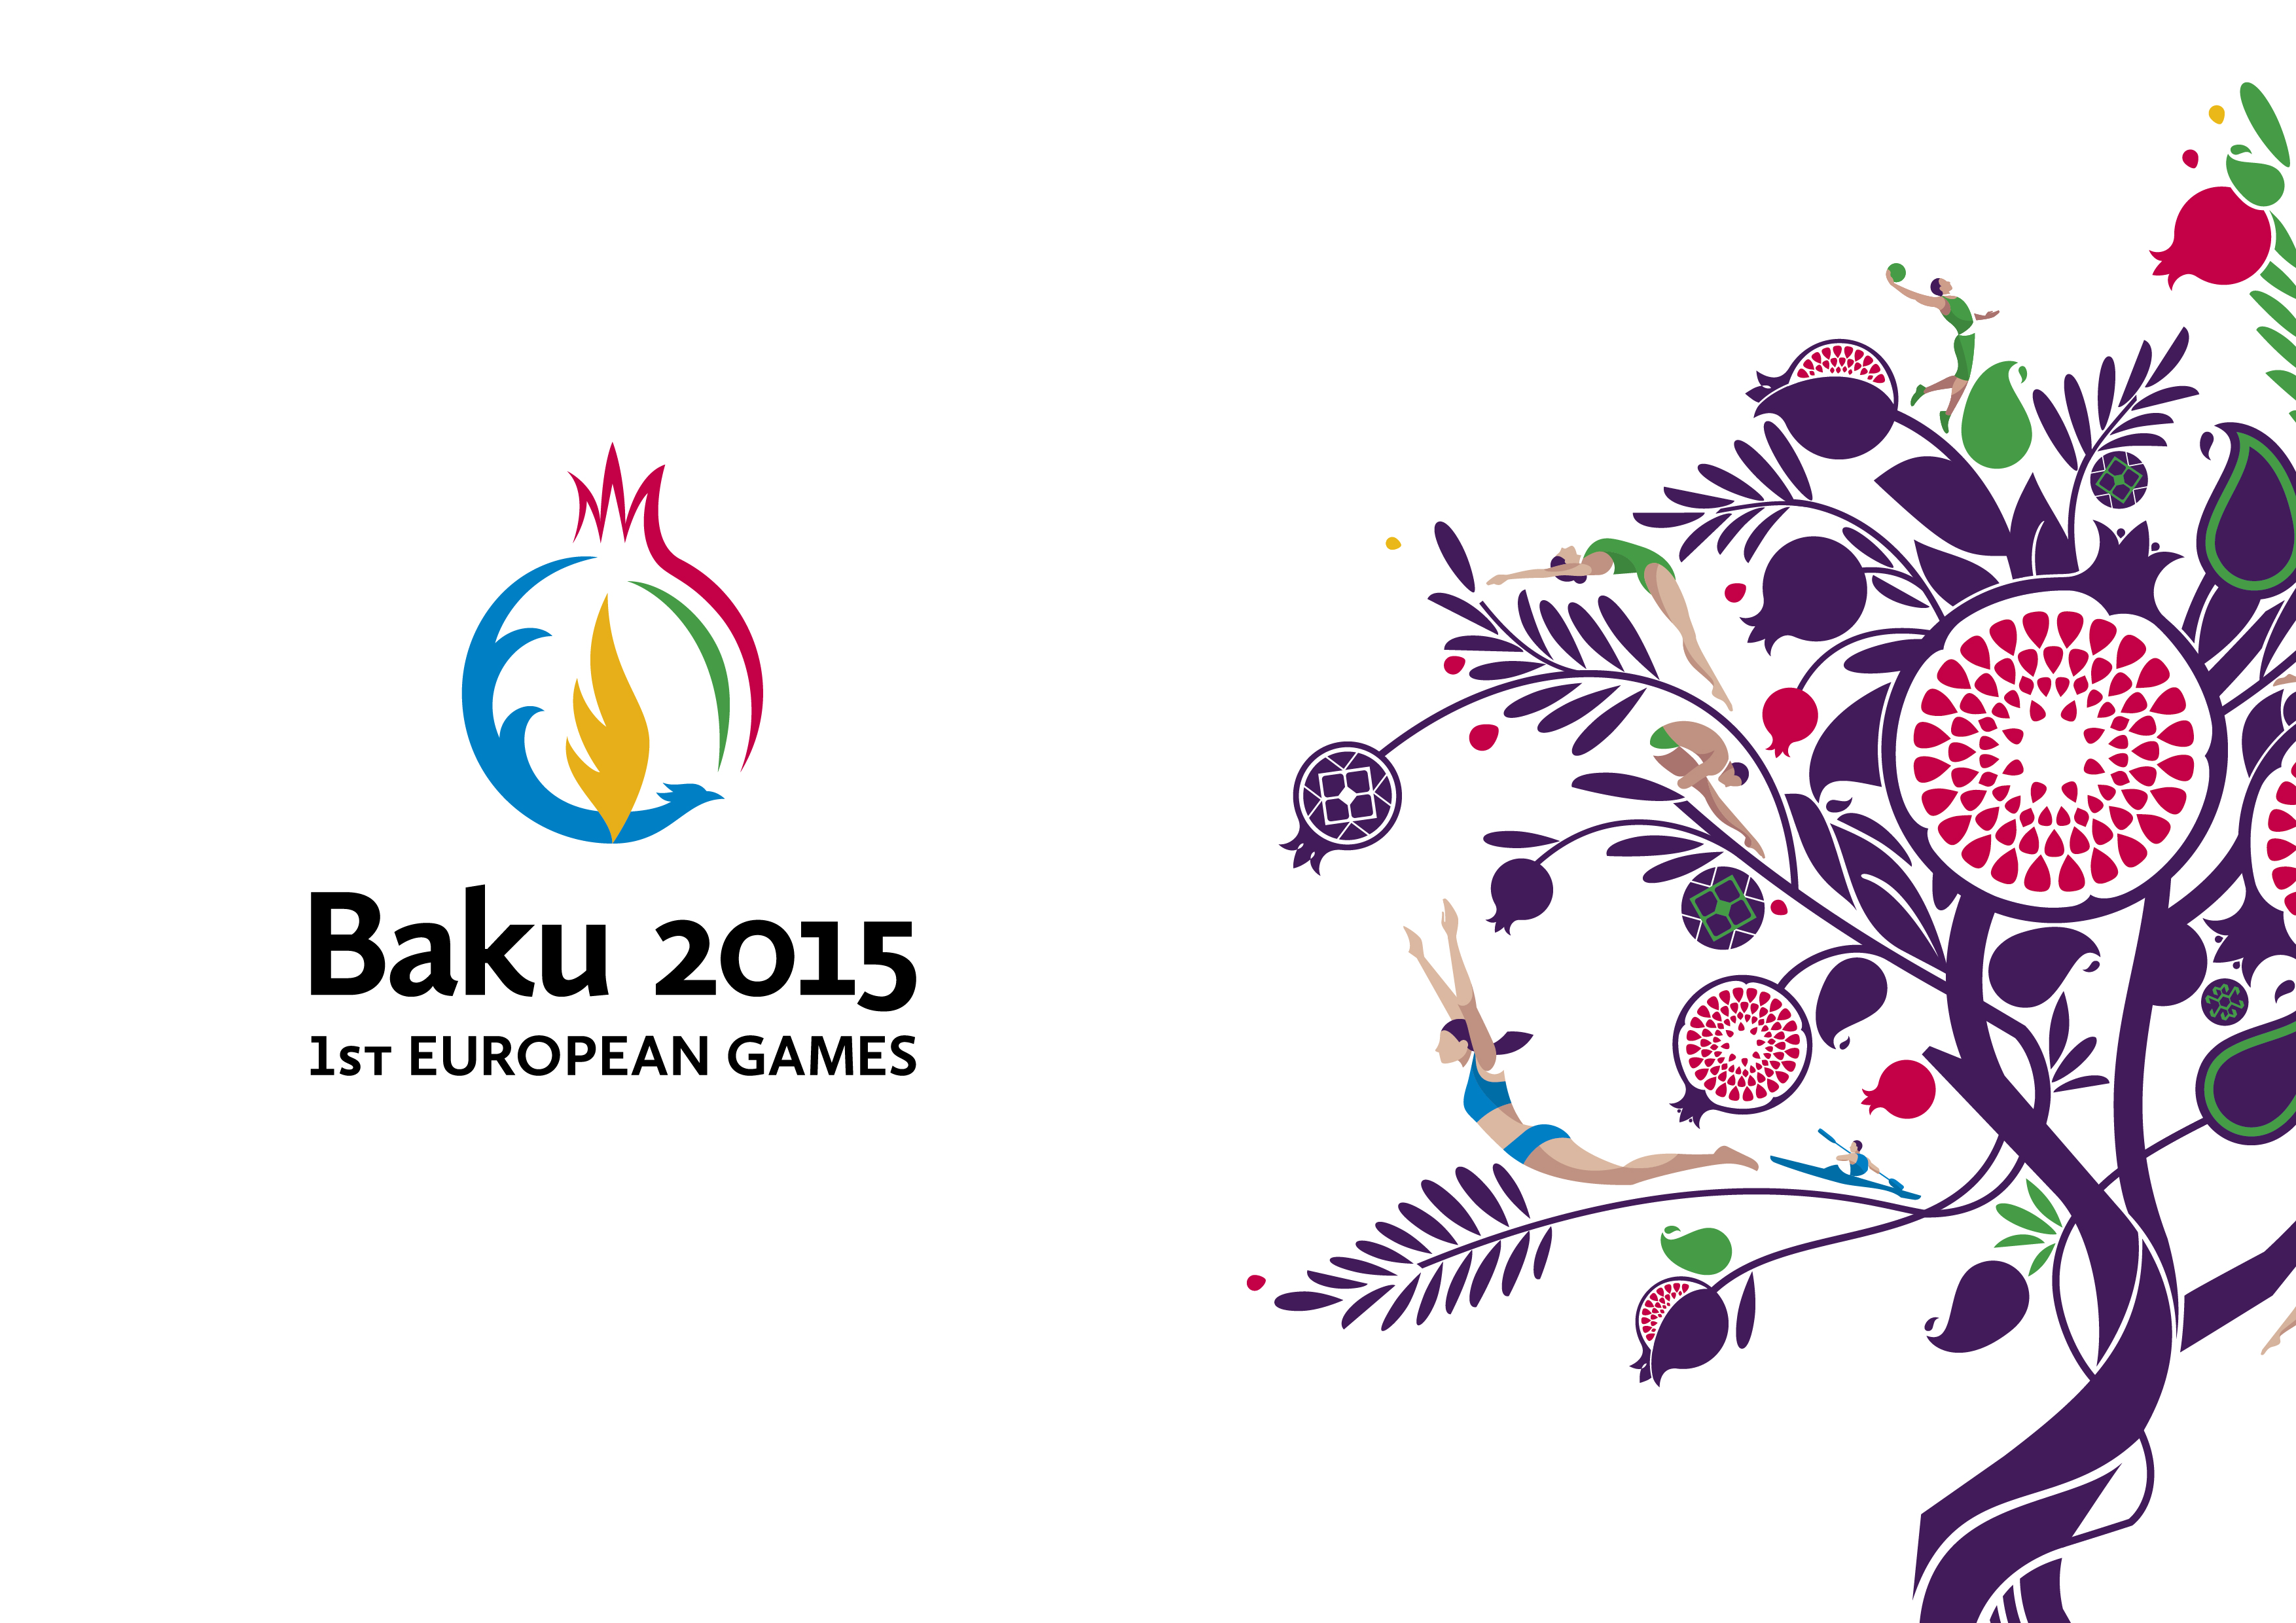 Baku 2015 branding receives int'l recognition